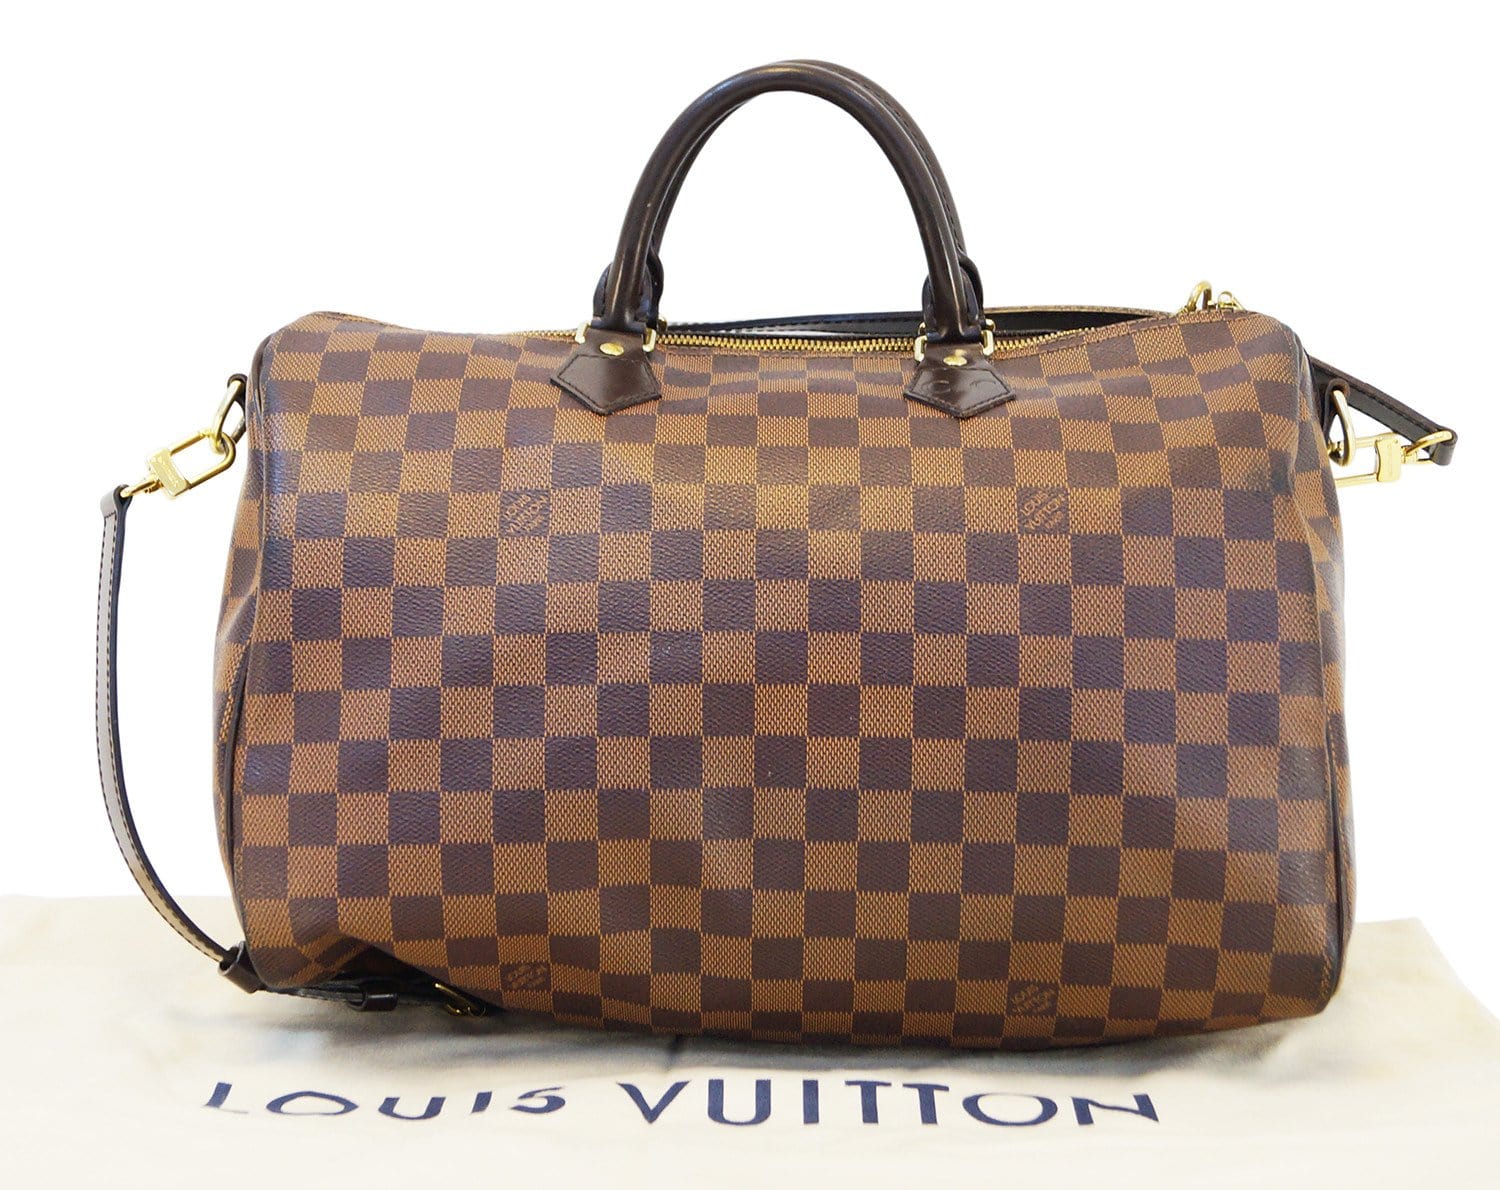 Authentic Louis Vuitton Speedy 35 Damier Ebene Handbag - The ICT University